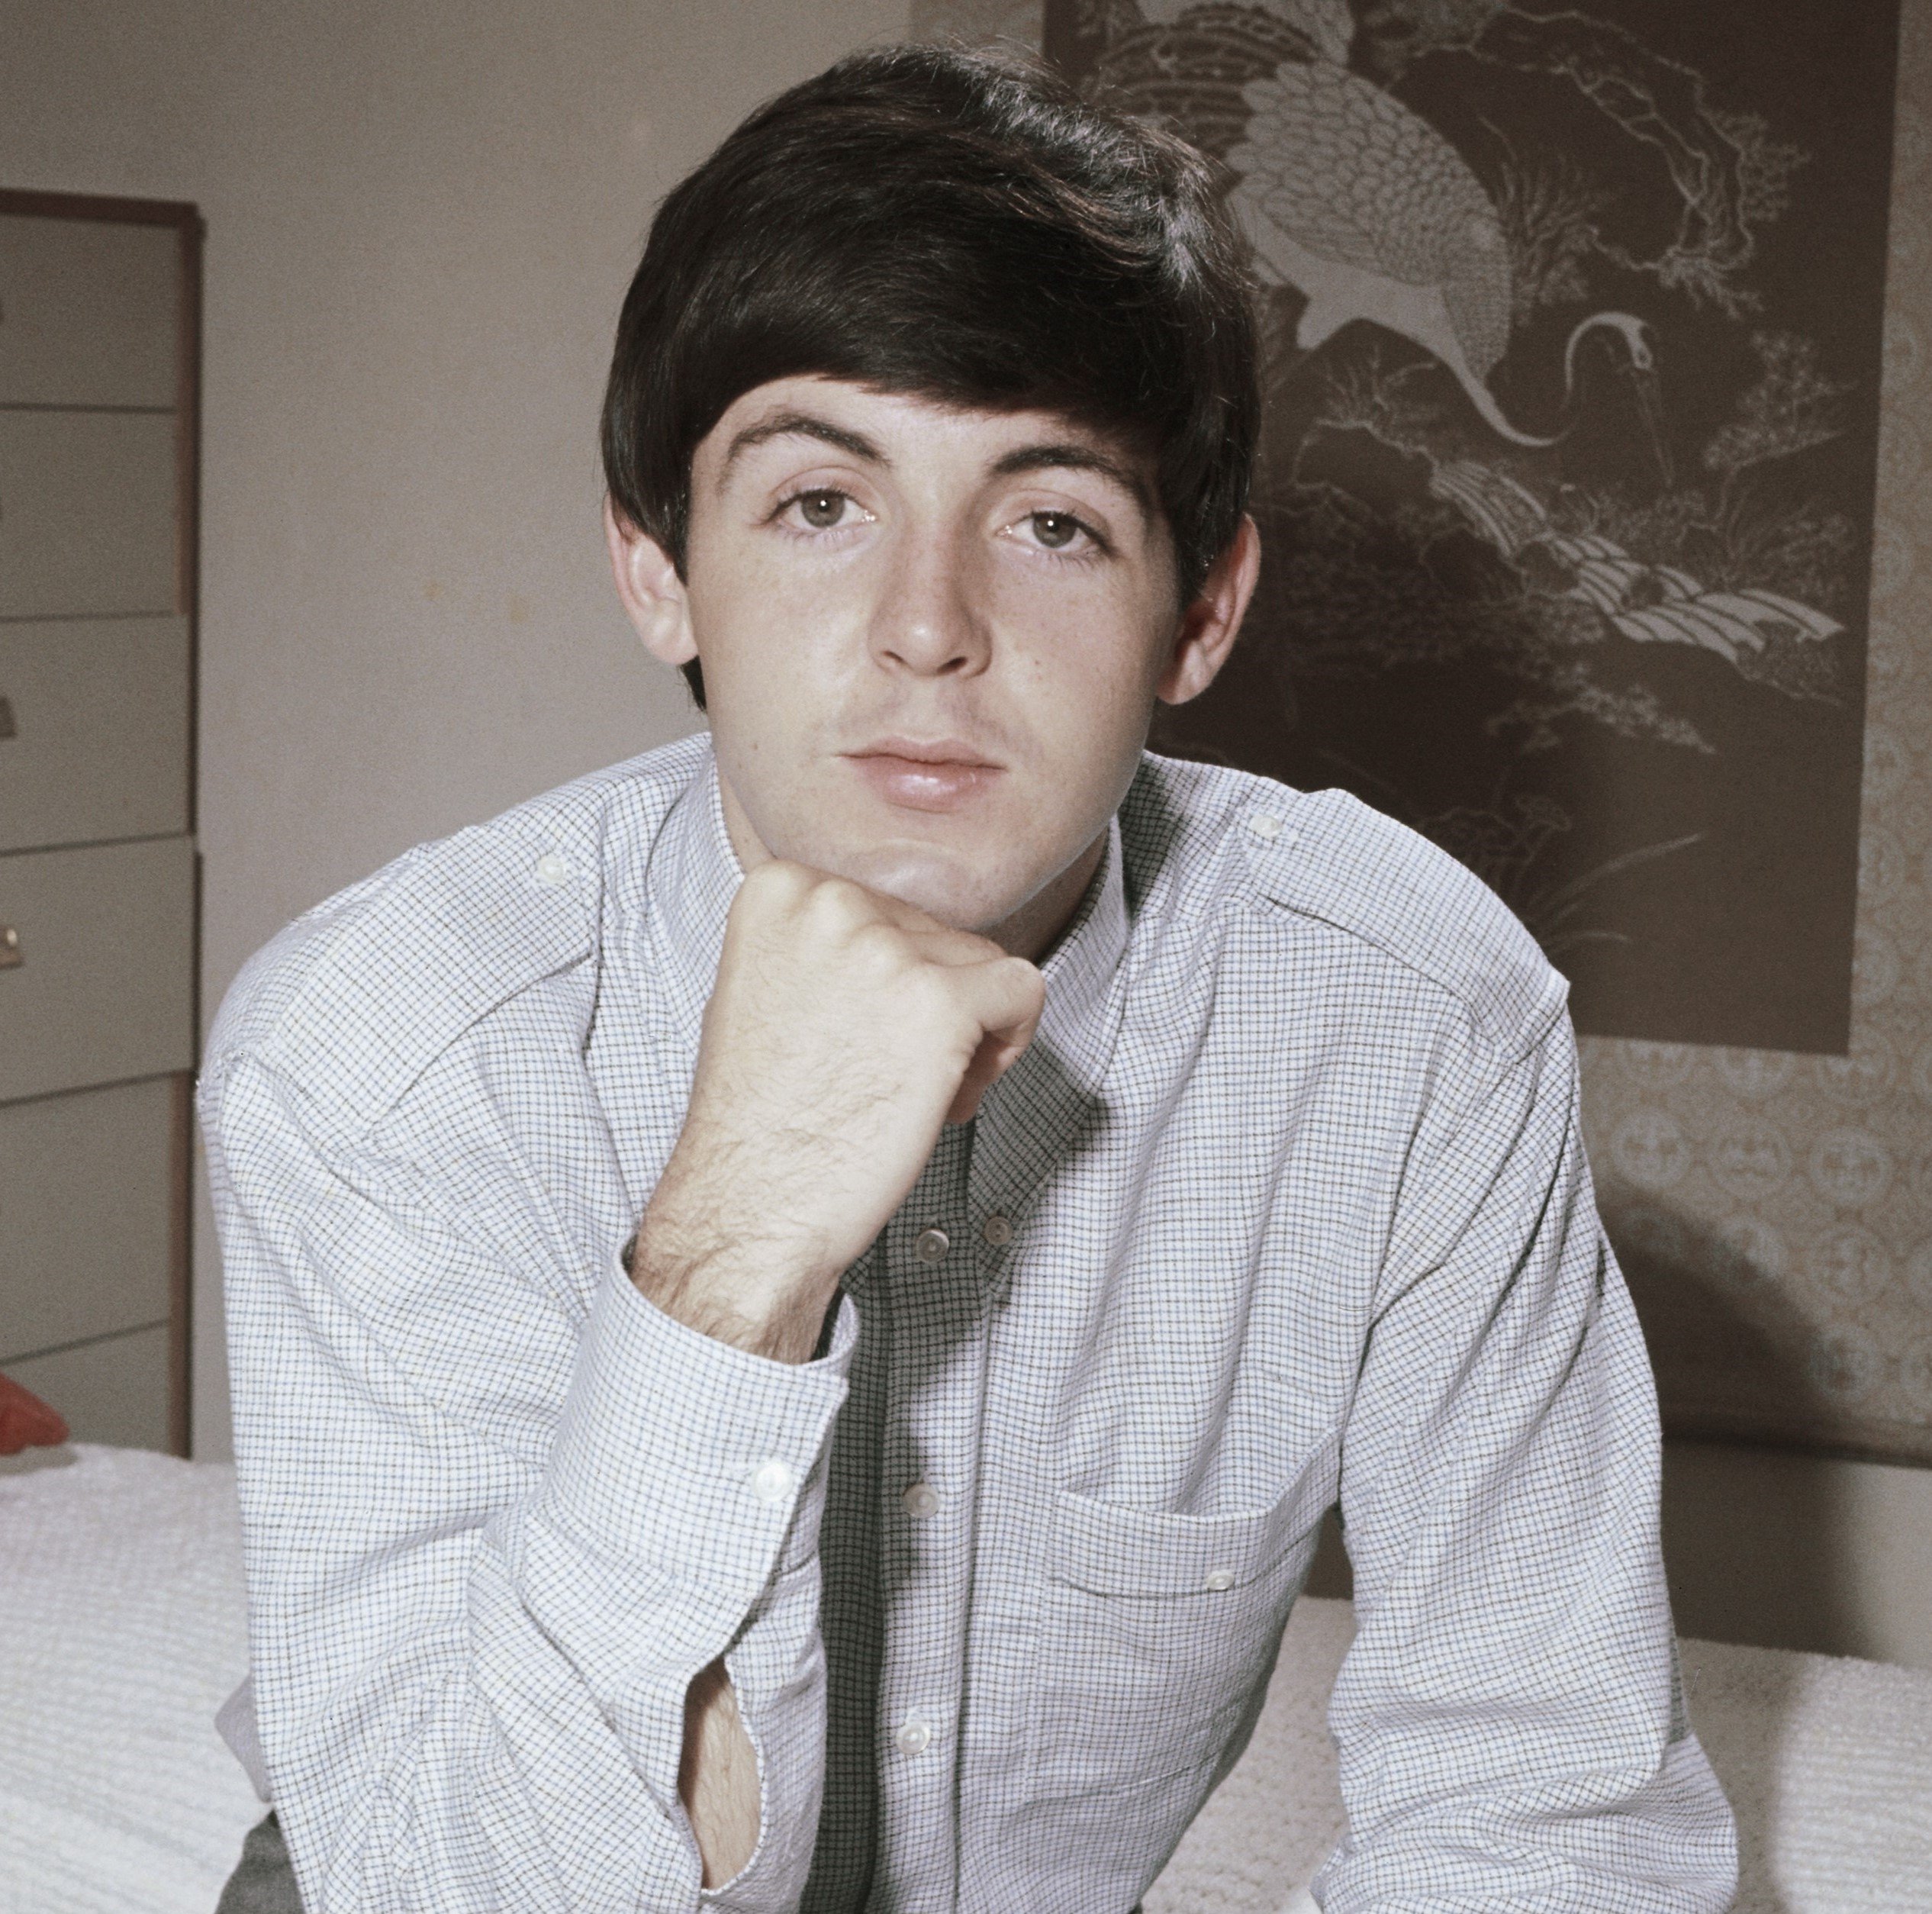 Paul McCartney on a bed